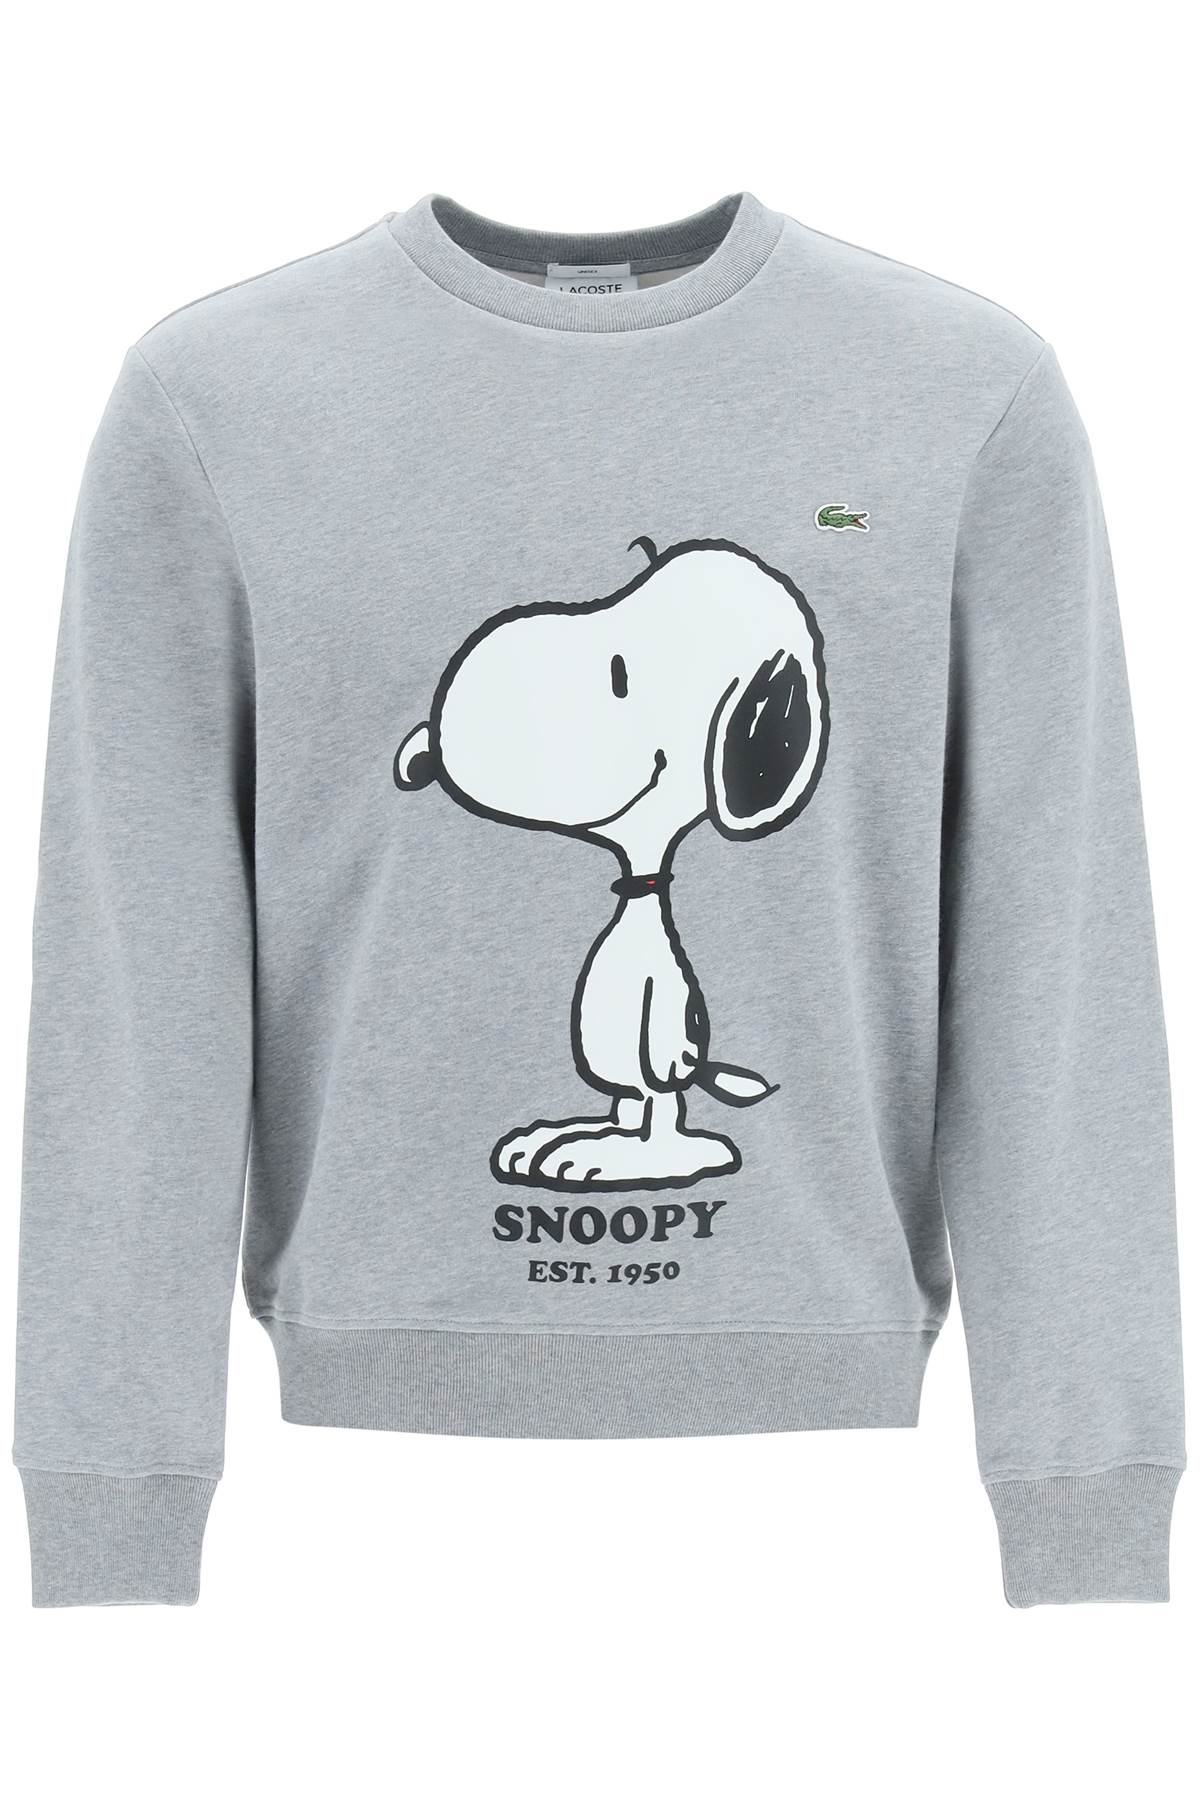 Lacoste Peanuts Print Crewneck Sweatshirt